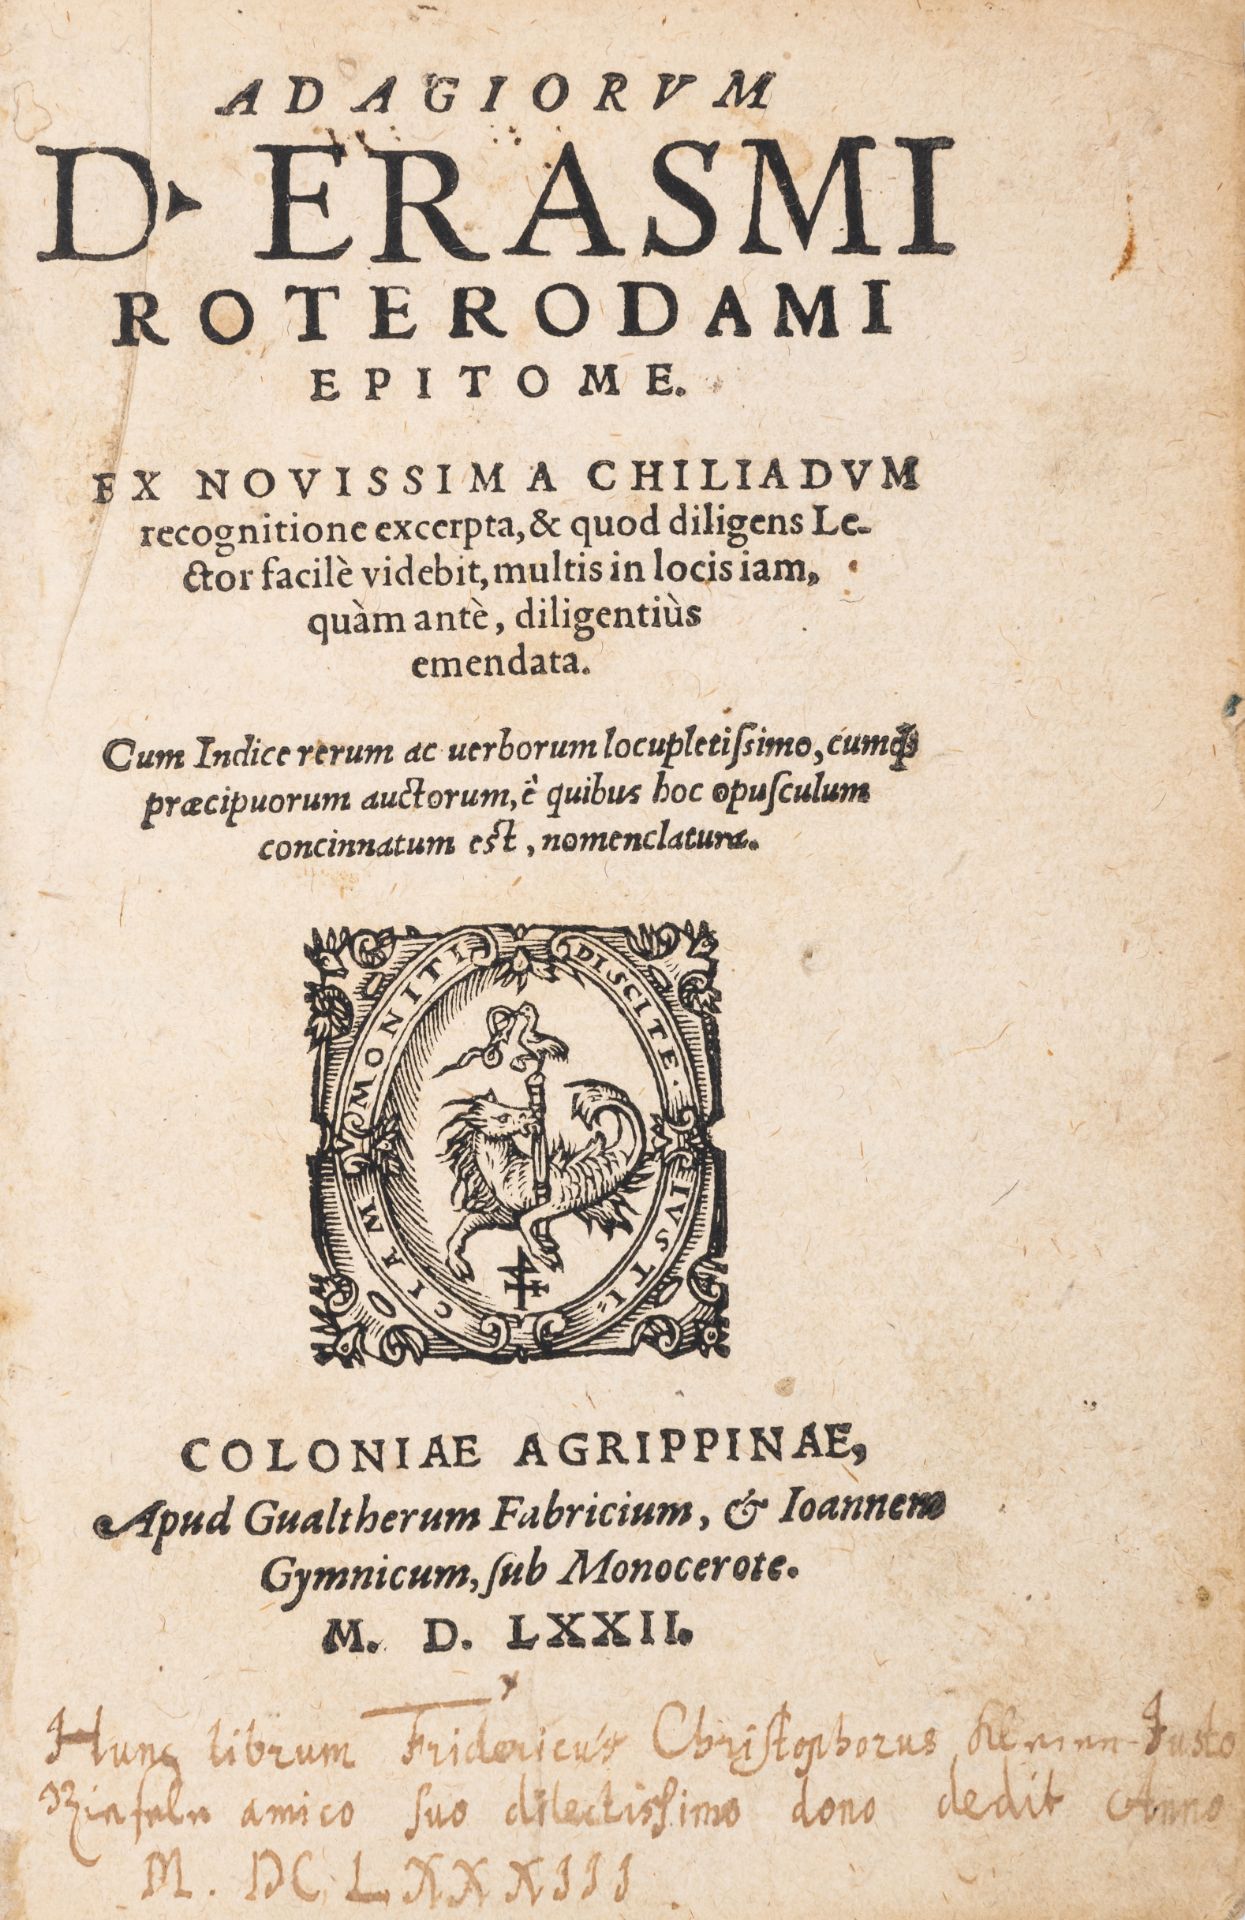 Erasmus (Desiderius) Adagiorum D. Erasmi Roterodami epitome, Cologne, Walther Fabritius, 1572.